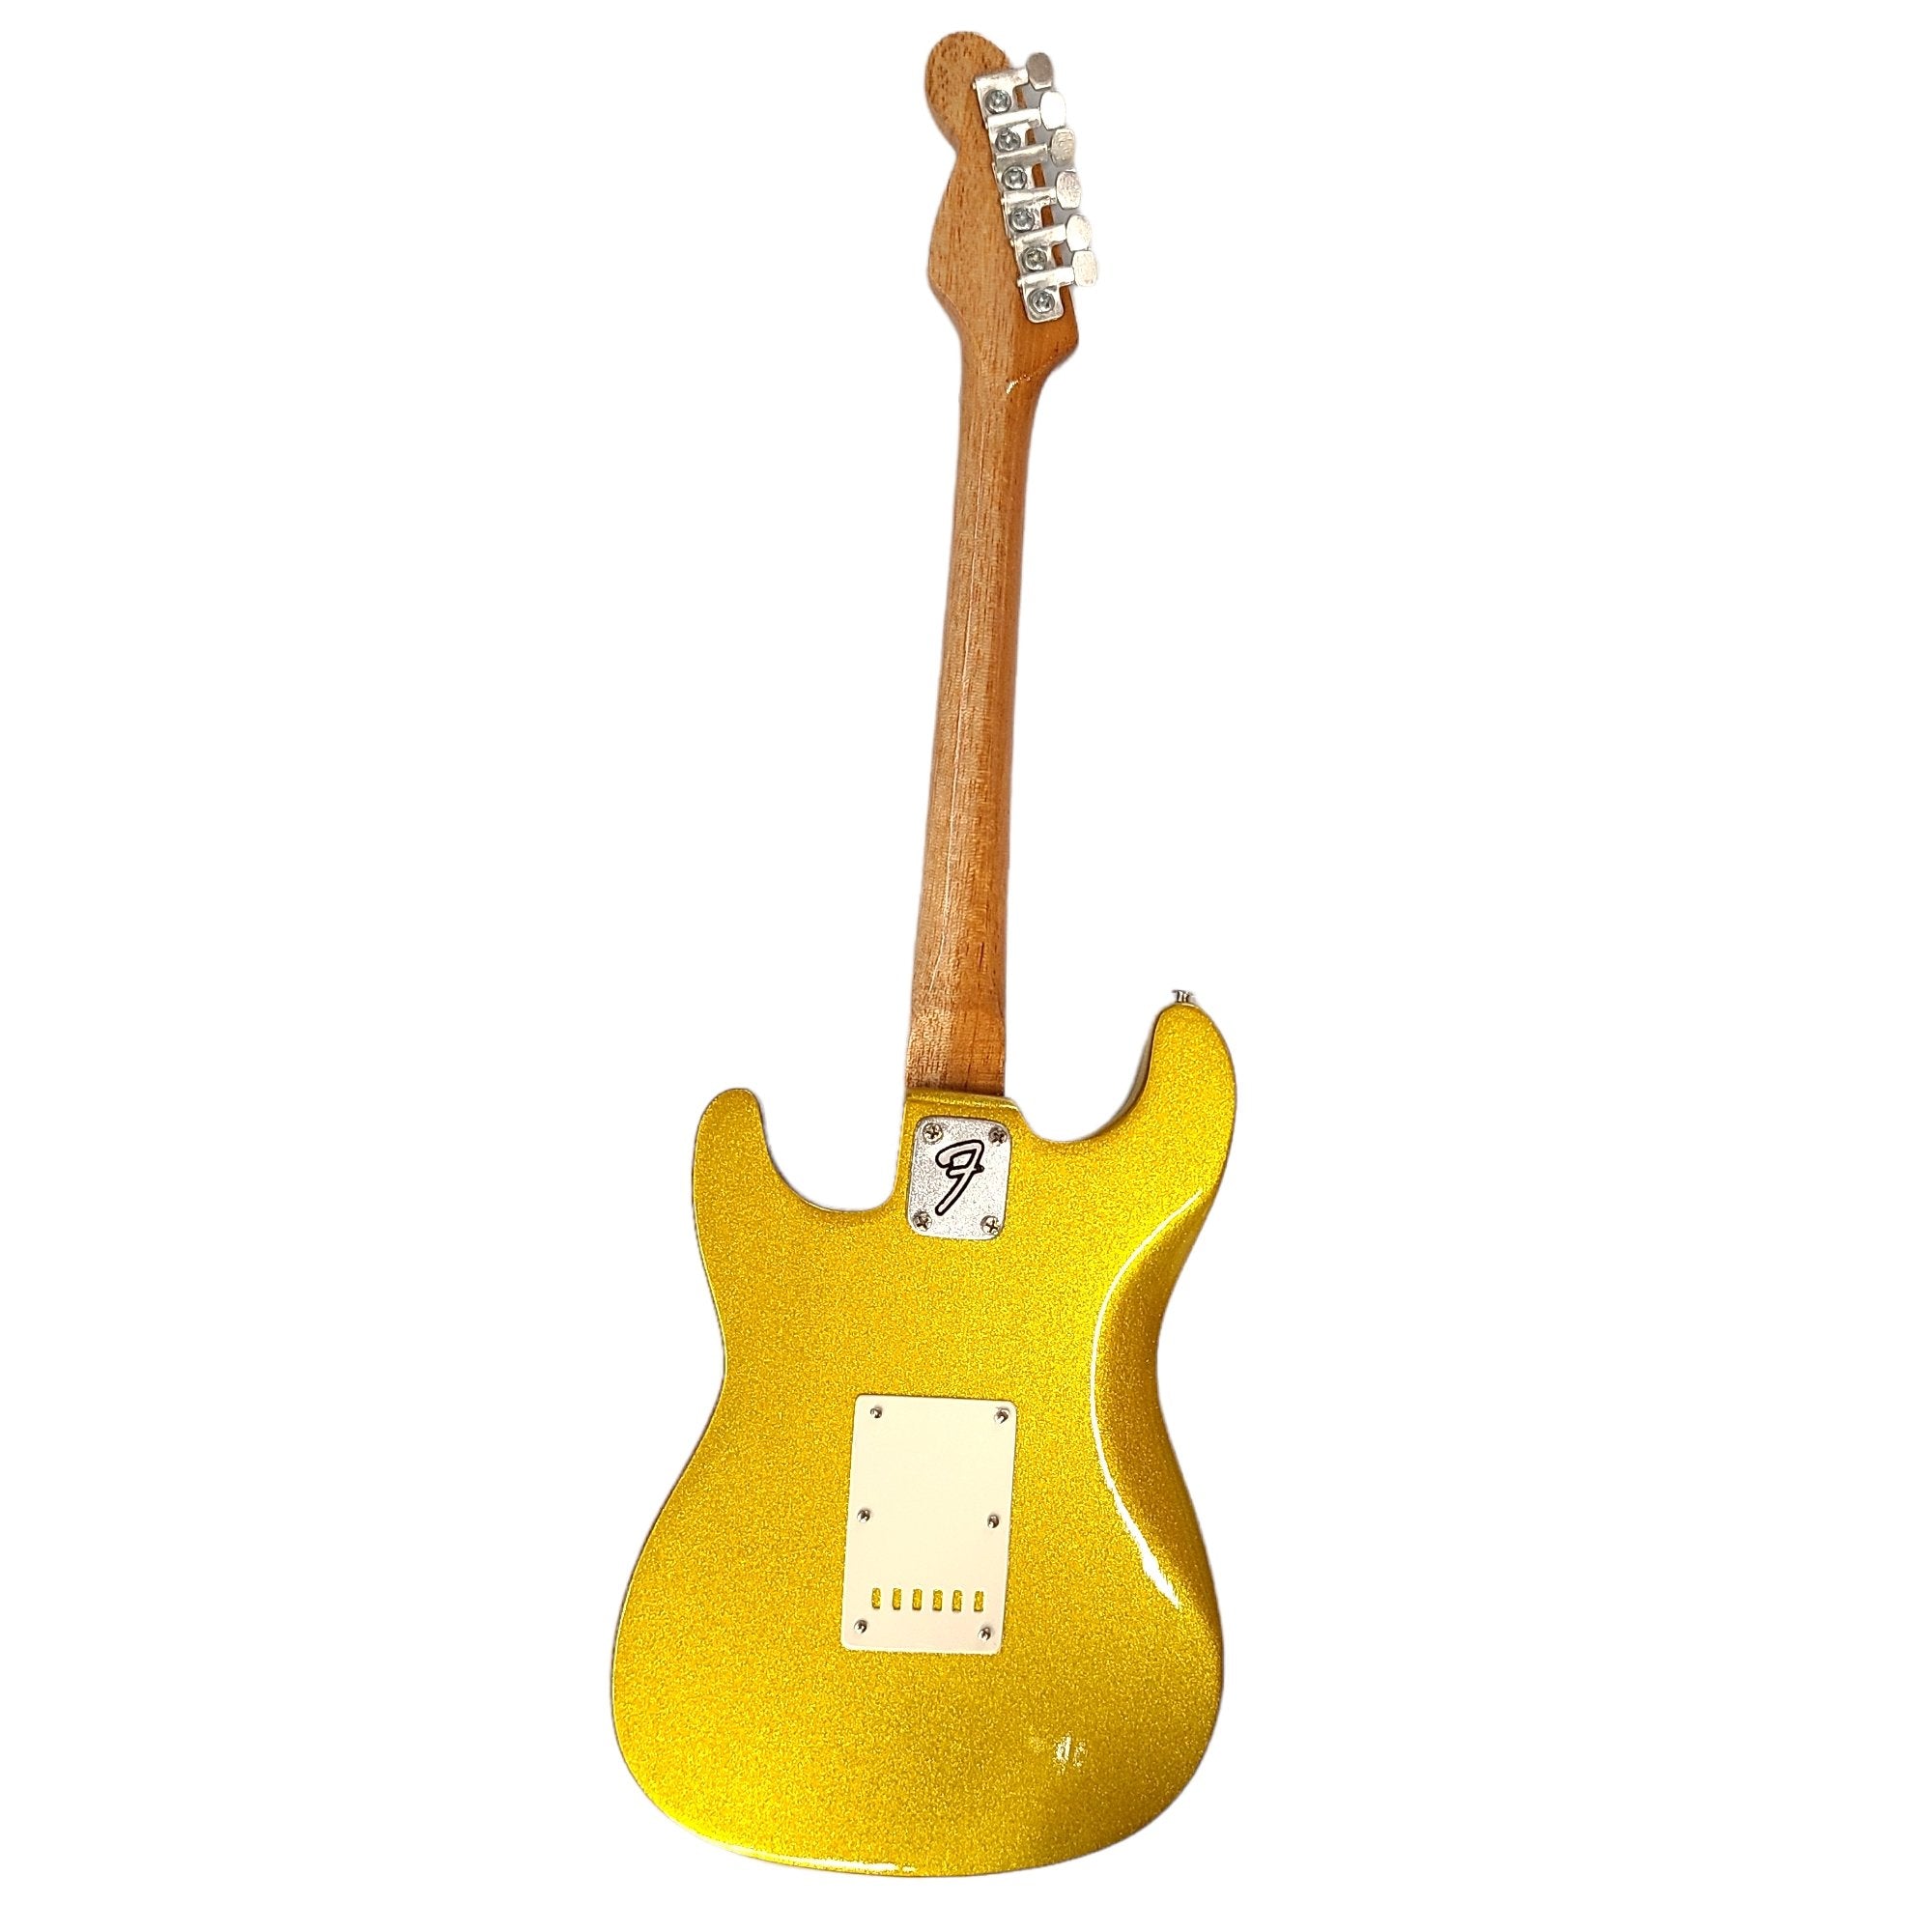 Axe Heaven Gold Finish Licensed Fender Strat Mini Guitar Replica FS-020